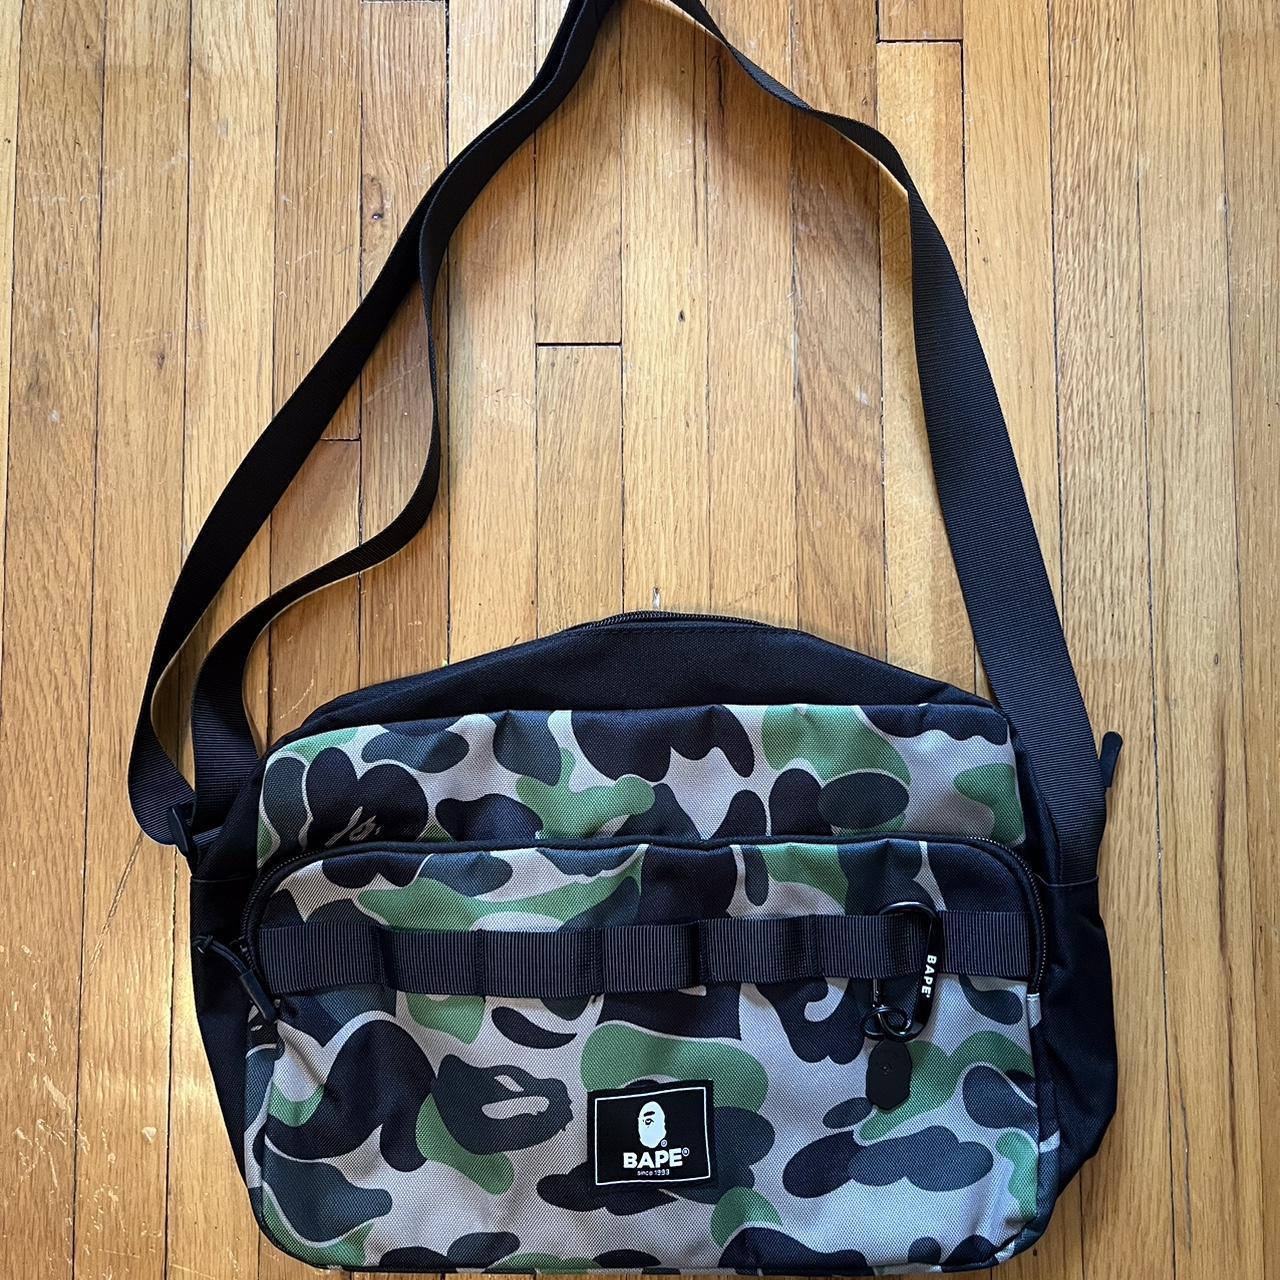 BAPE Duffle Bag perfect for weekend trips free - Depop